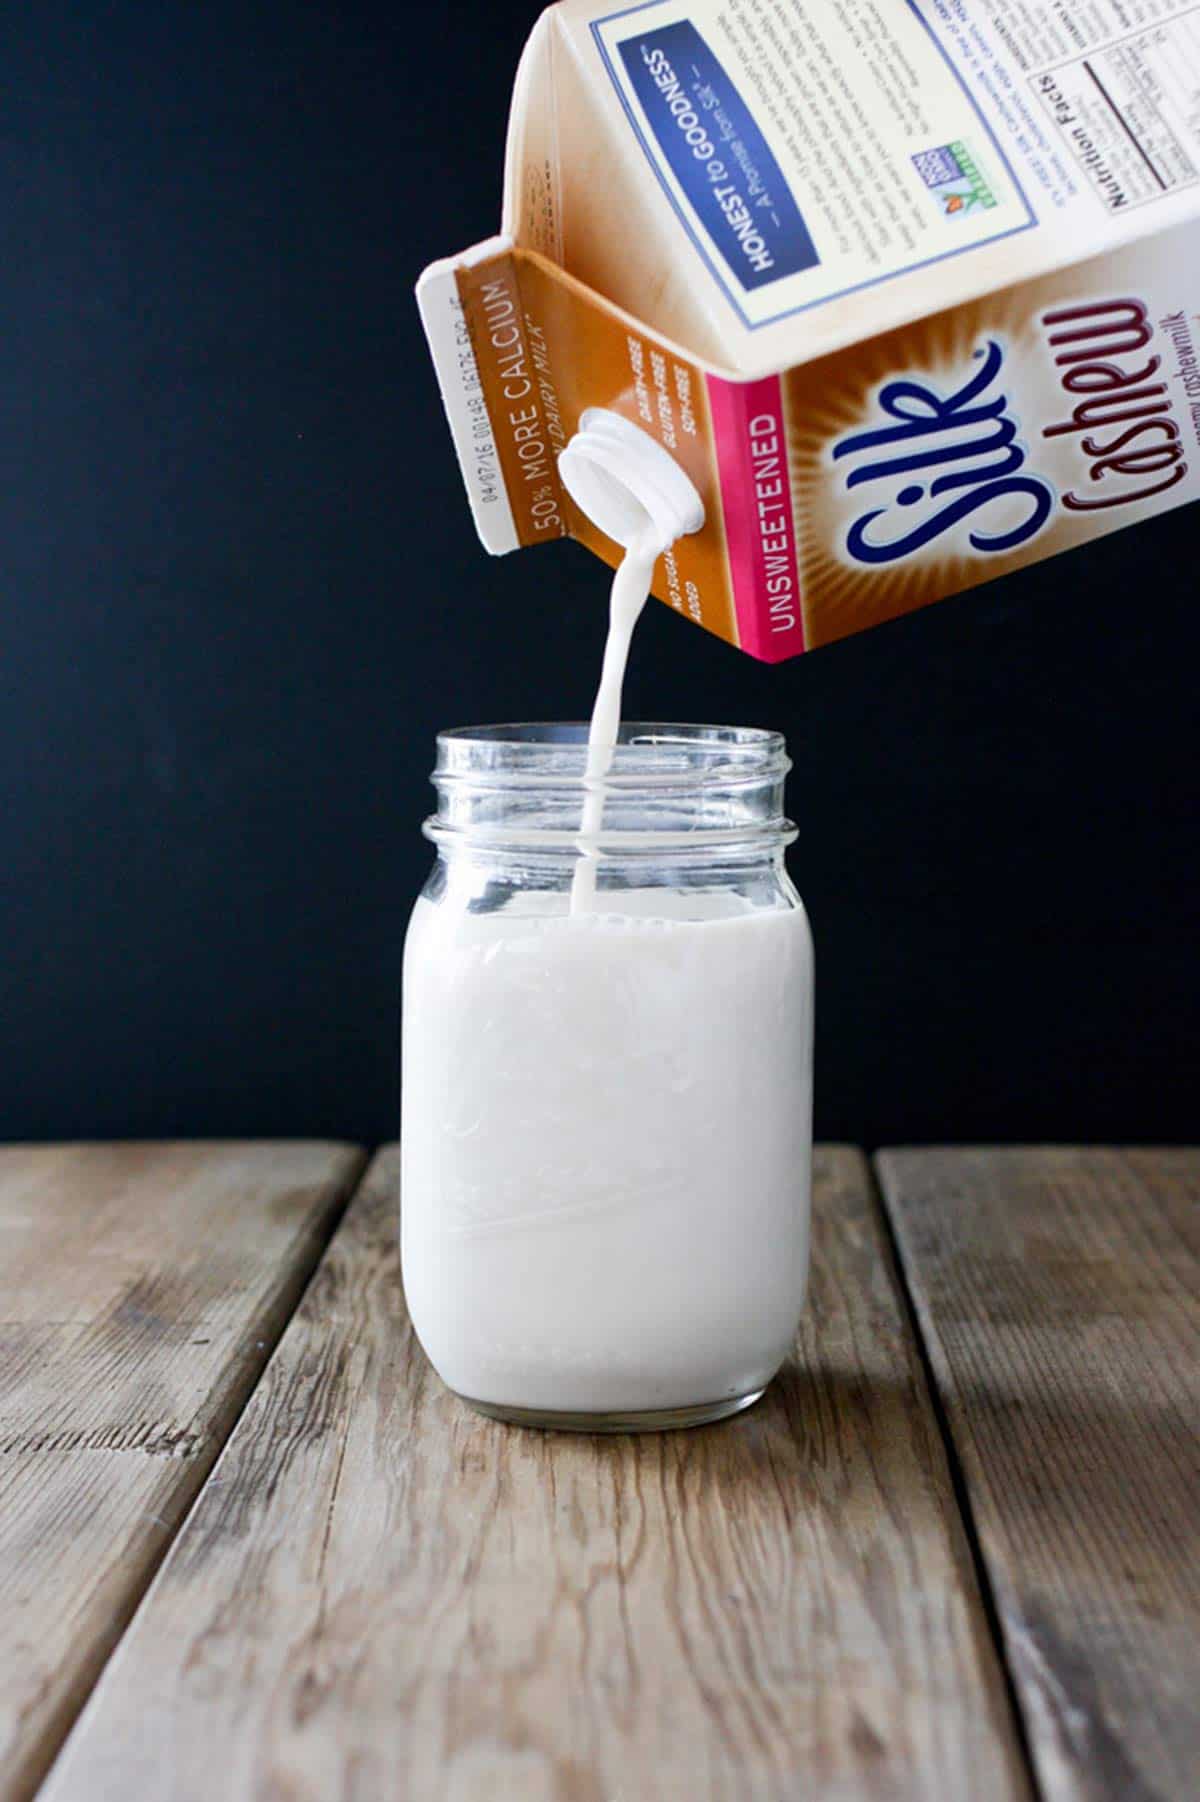 Carton of cashew milk pouring milk into a glass jar.